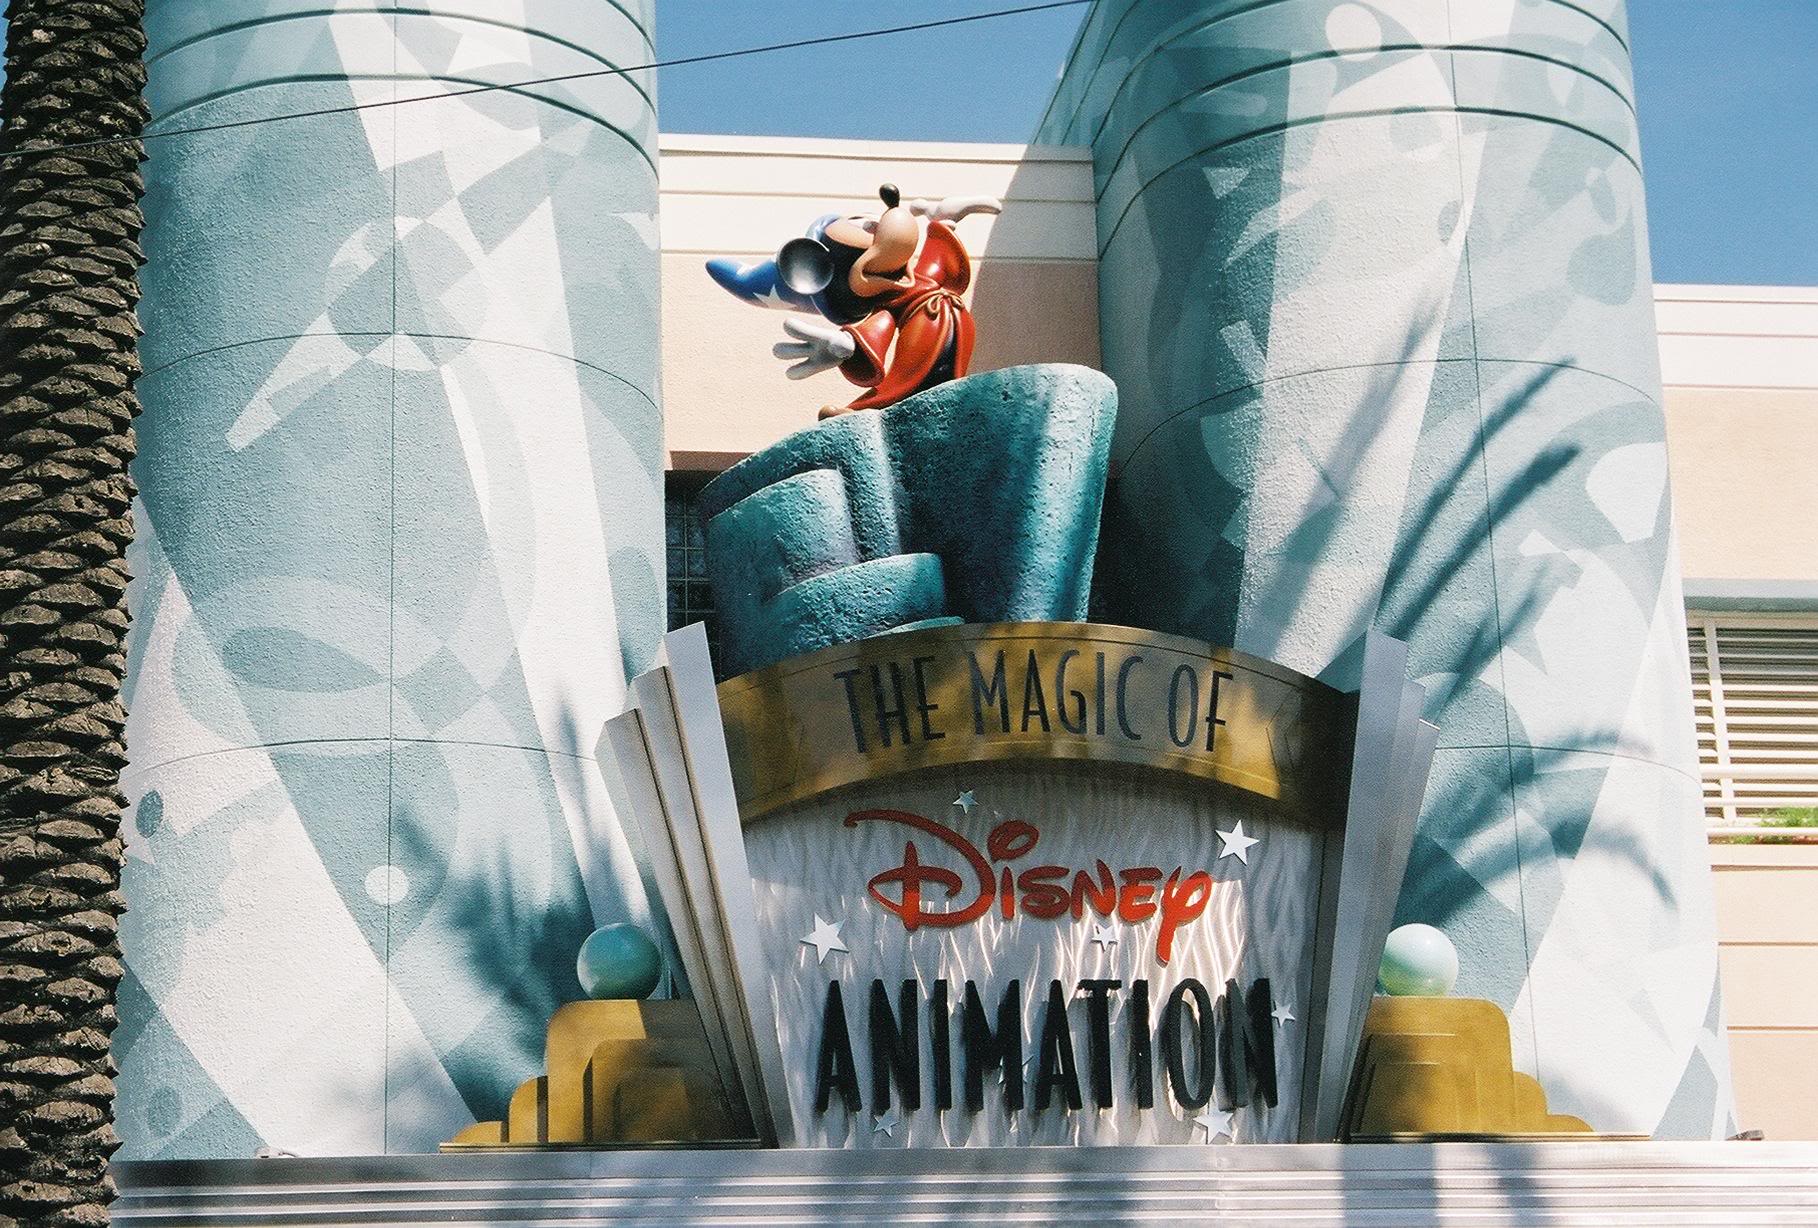 The_Magic_of_Disney_Animation.jpg